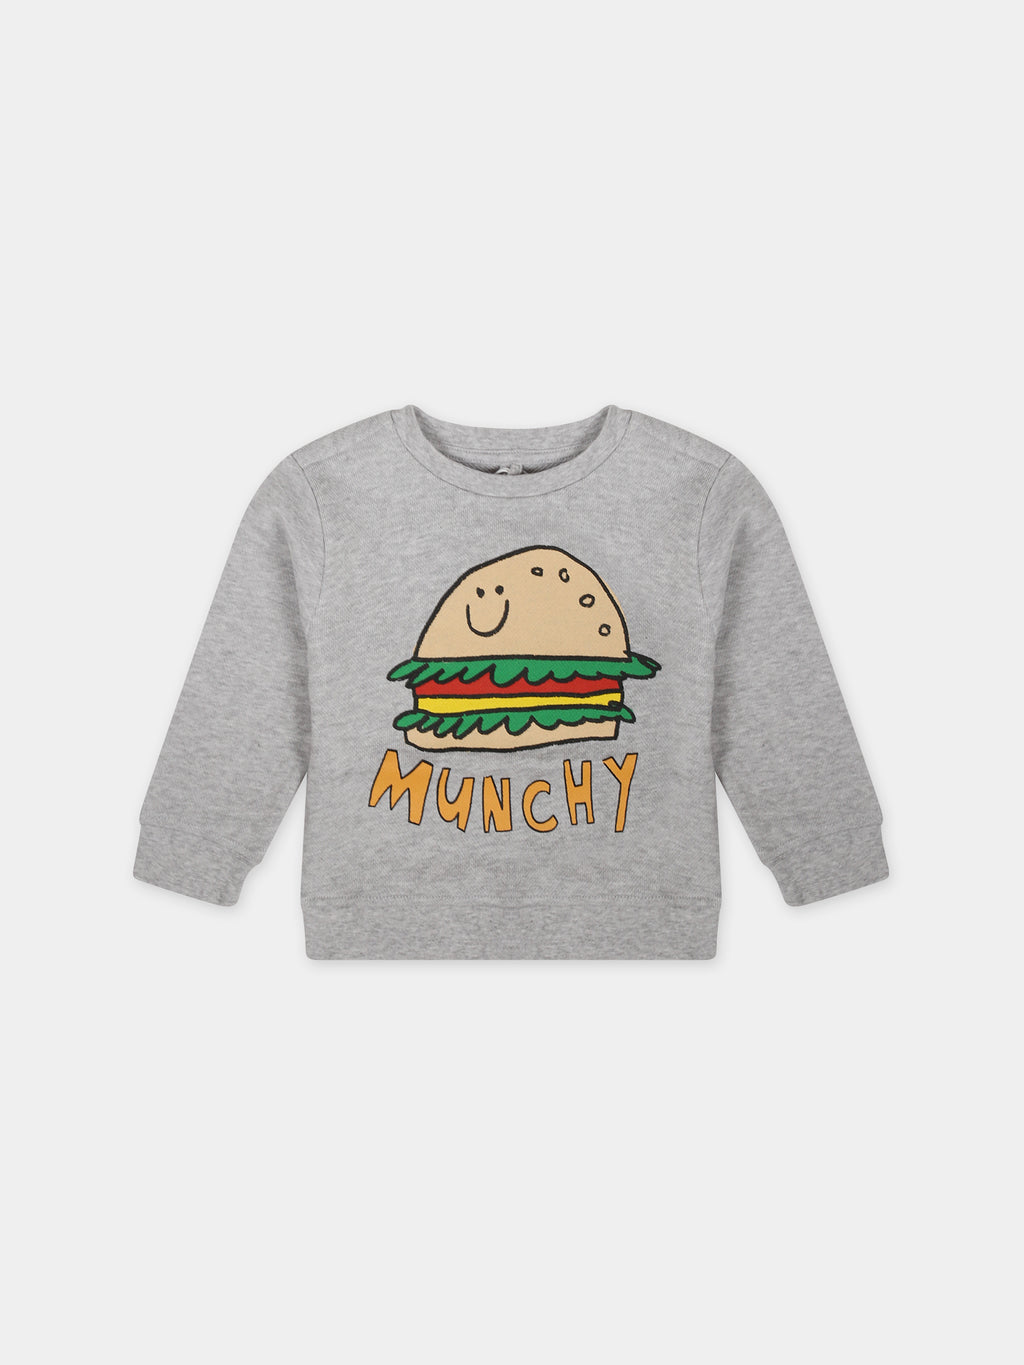 Grey sweatshirt for baby boy with hamburger print